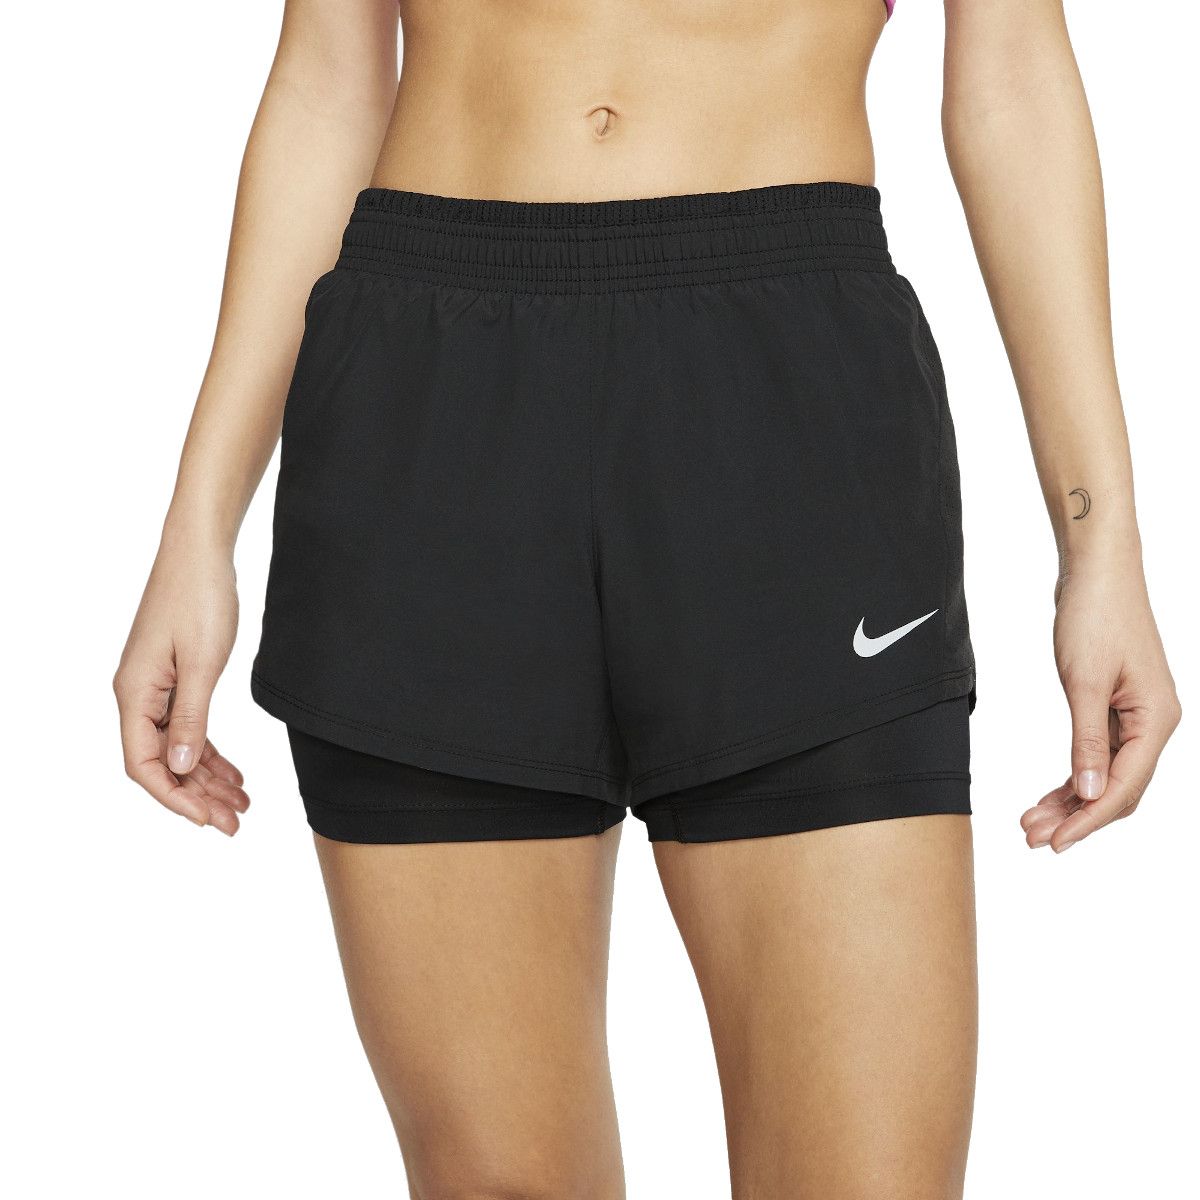 Nike 2-in-1 Women's Running Shorts CK1004-010